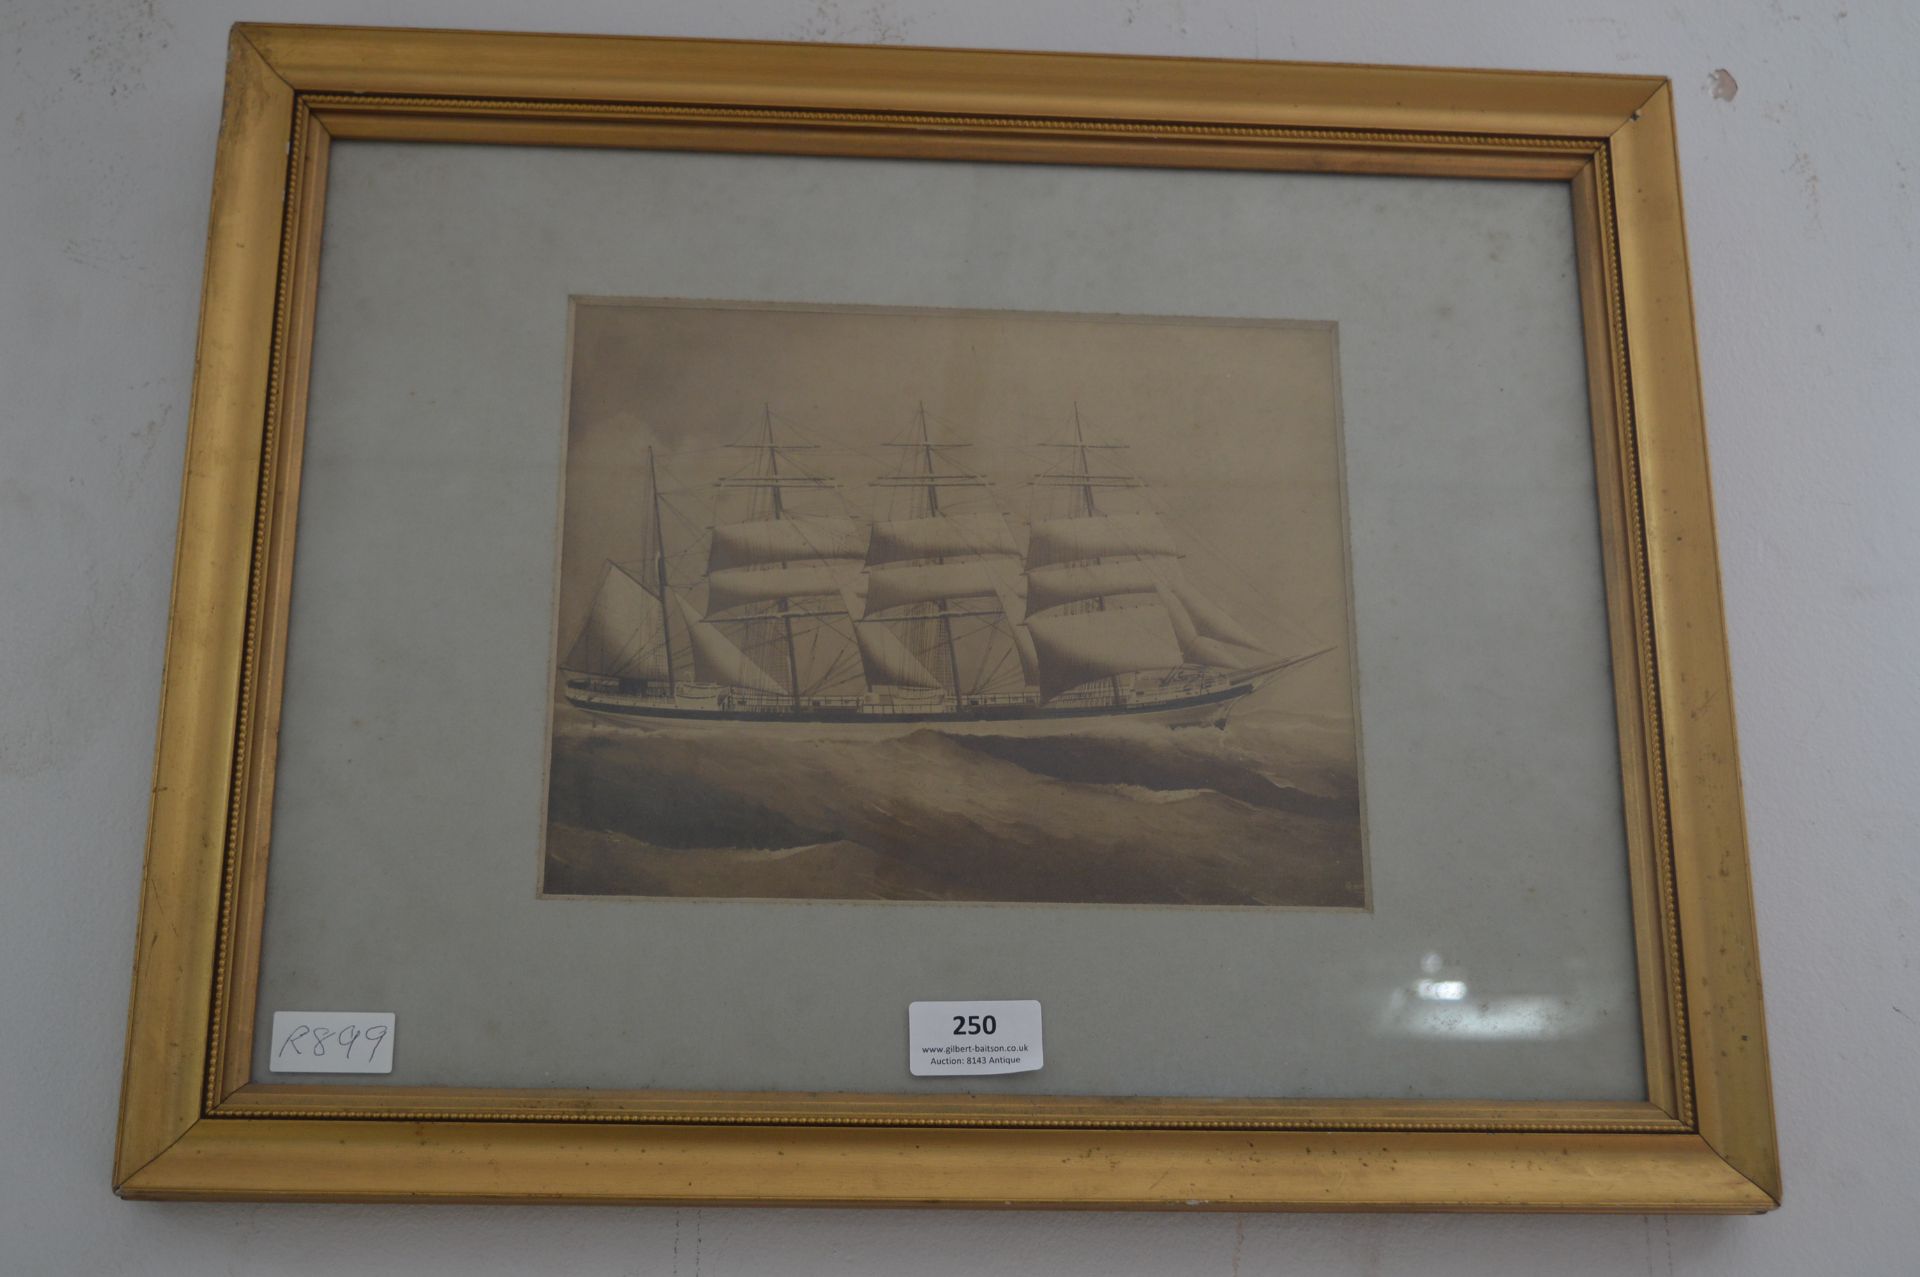 Framed Sepia Tone Maritime Print of a Sailing Vessel